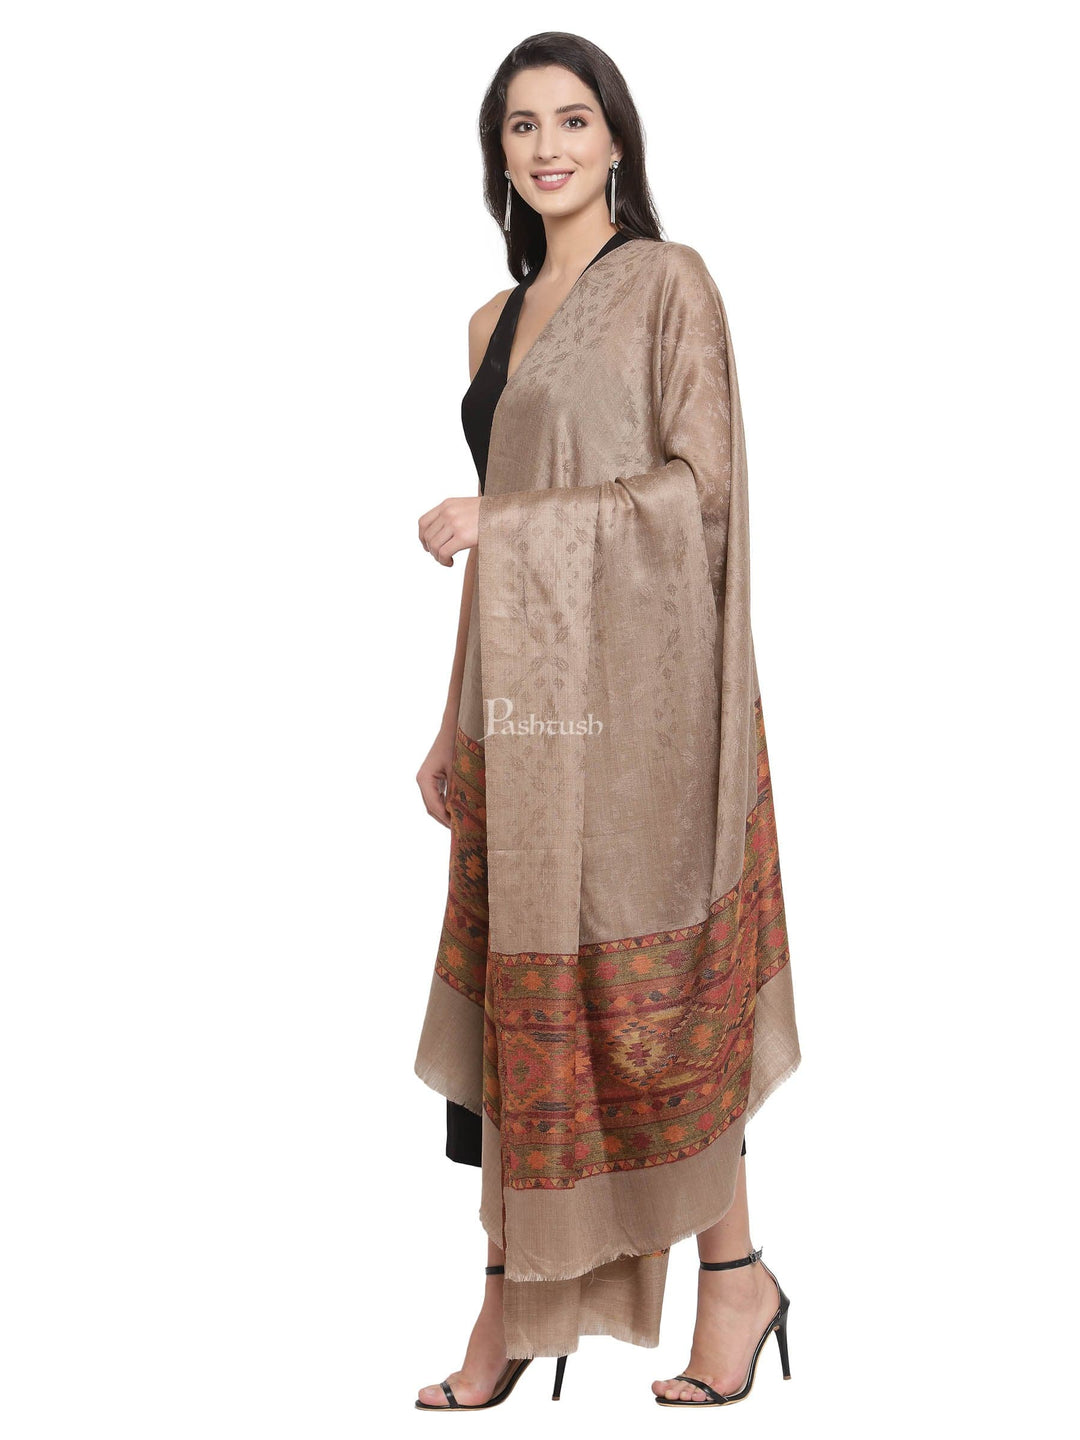 Pashtush India Womens Shawls Pashtush Womens Fine Wool Shawl, Taupe